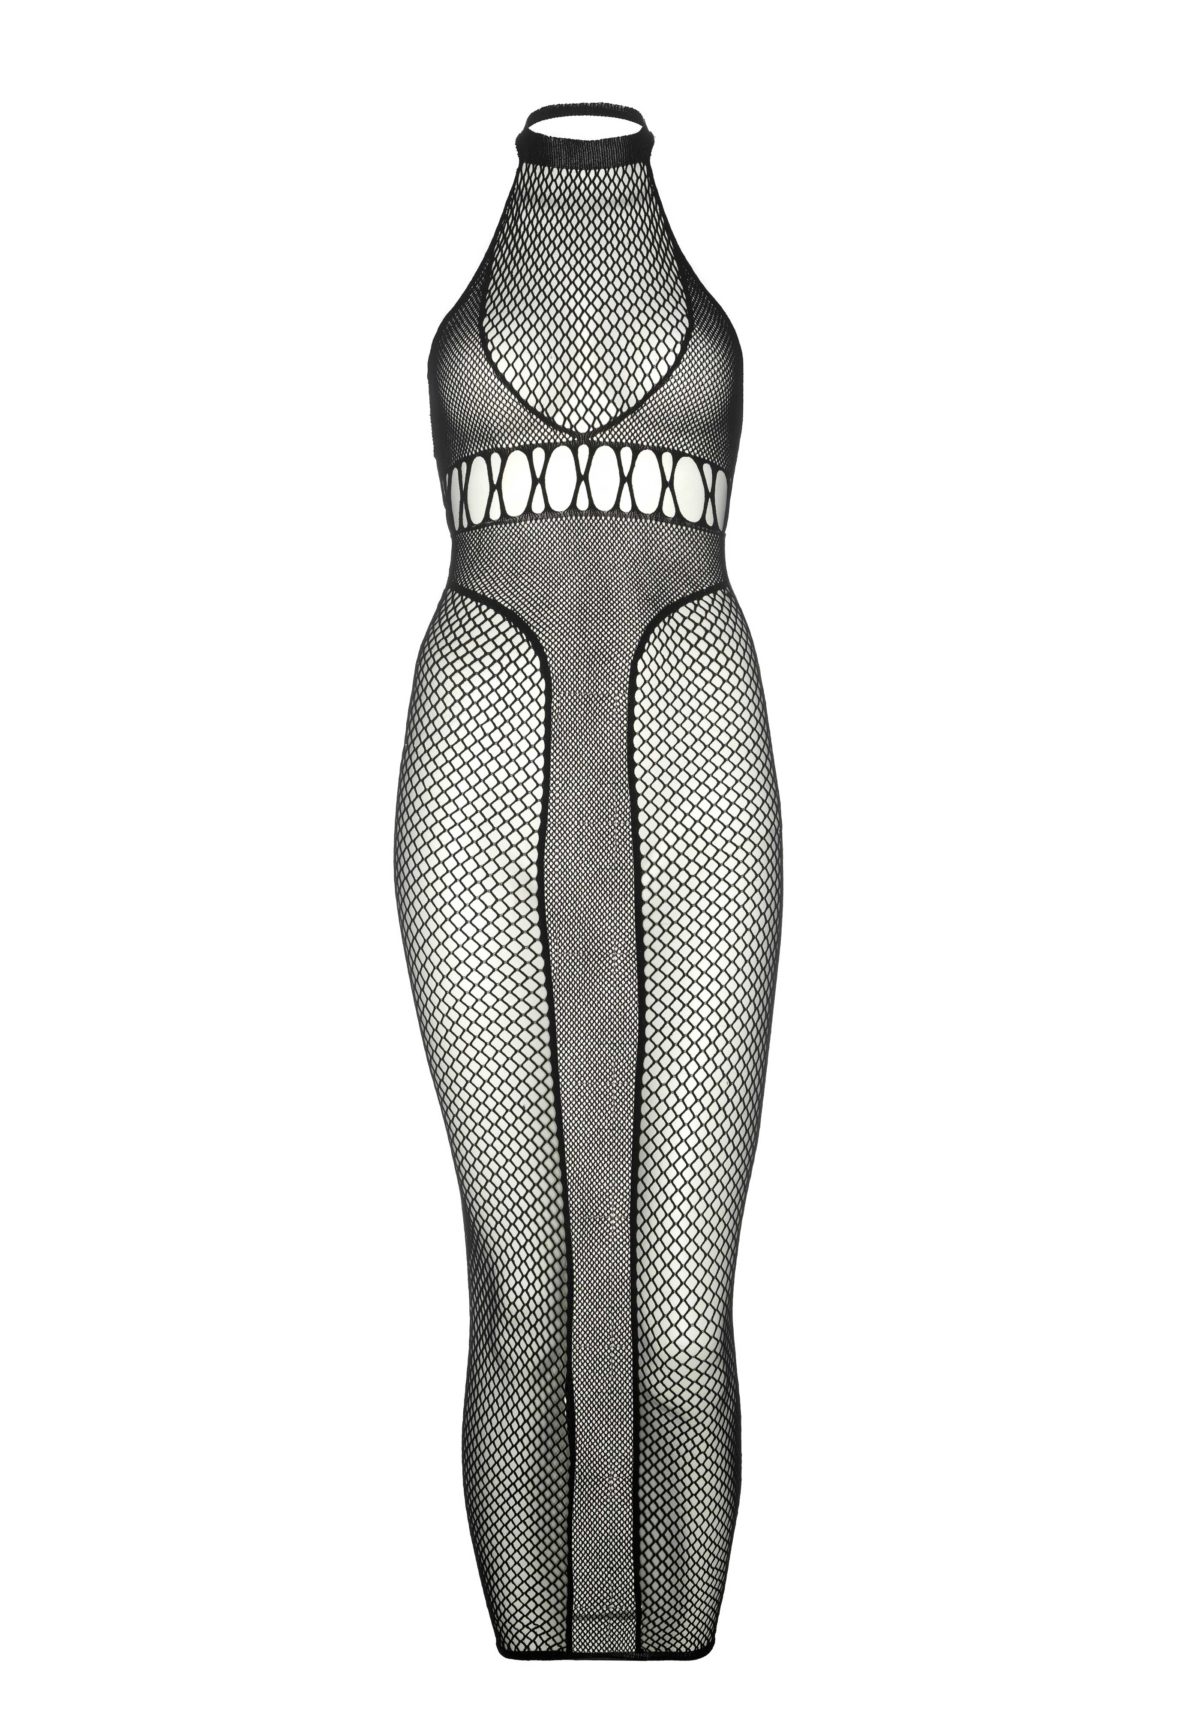 Sexy αποκαλυπτικό φόρεμα Halter duel net backless dress